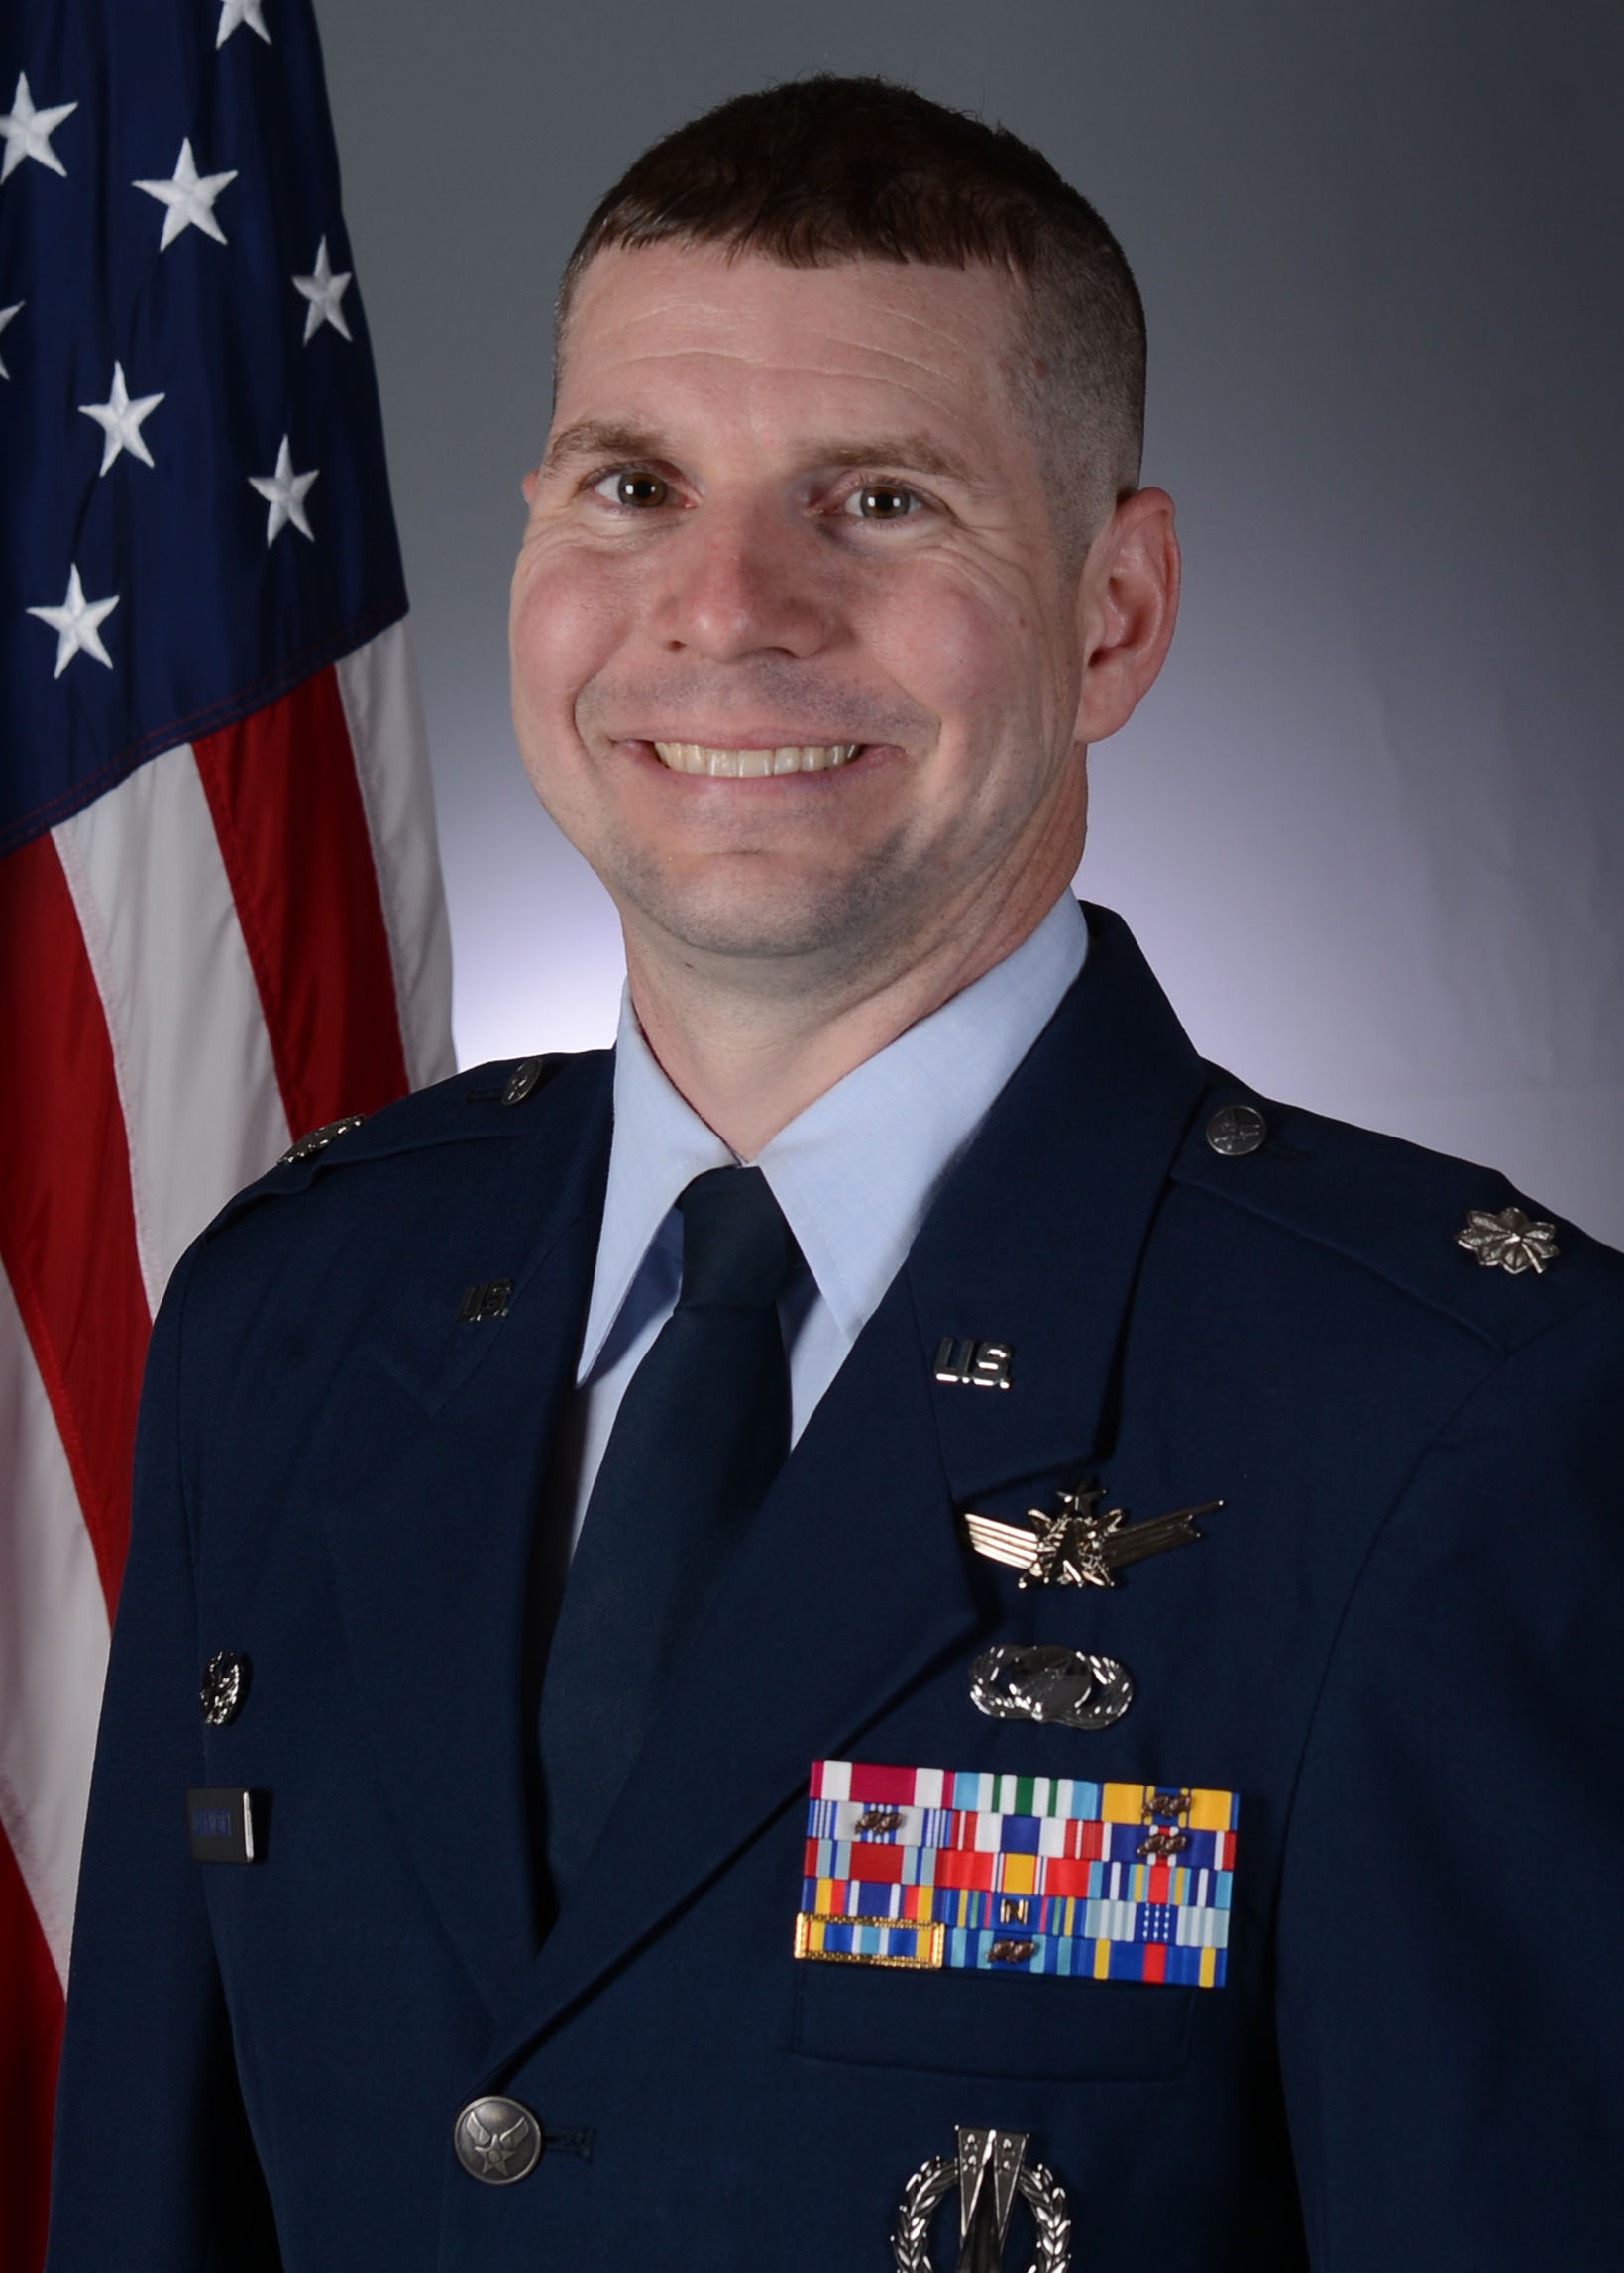 Photo of Lt Col Brandon Davenport, USAF wearing military uniform